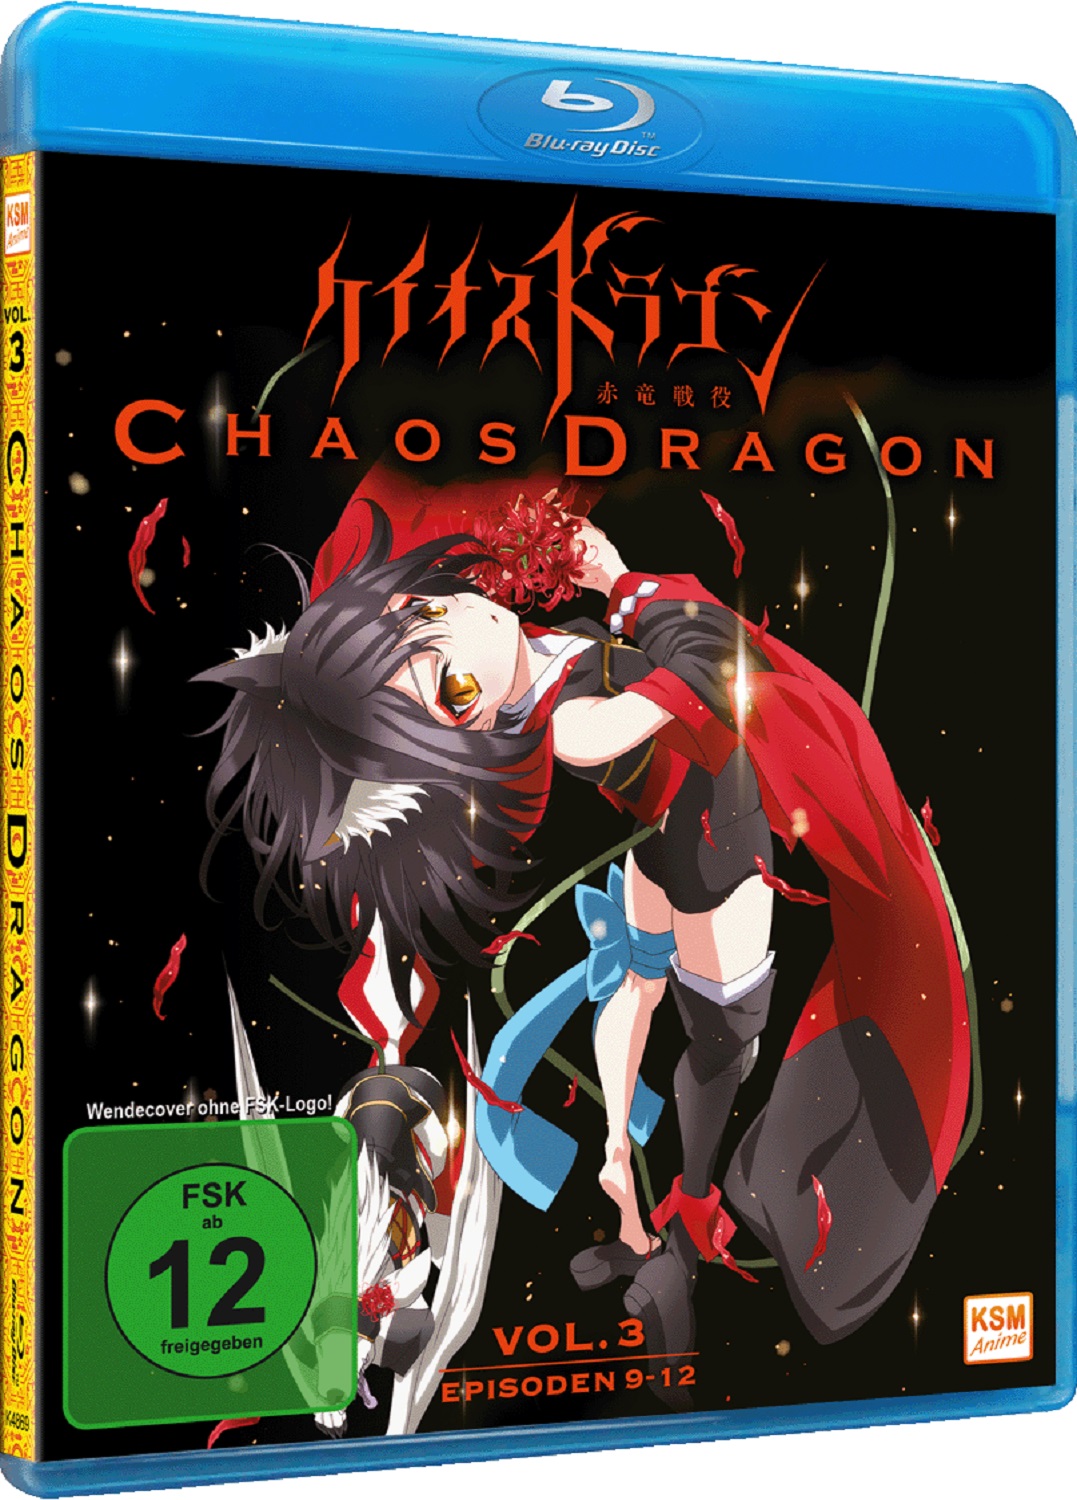 Chaos Dragon - Volume 3: Episode 09-12 Blu-ray Image 7